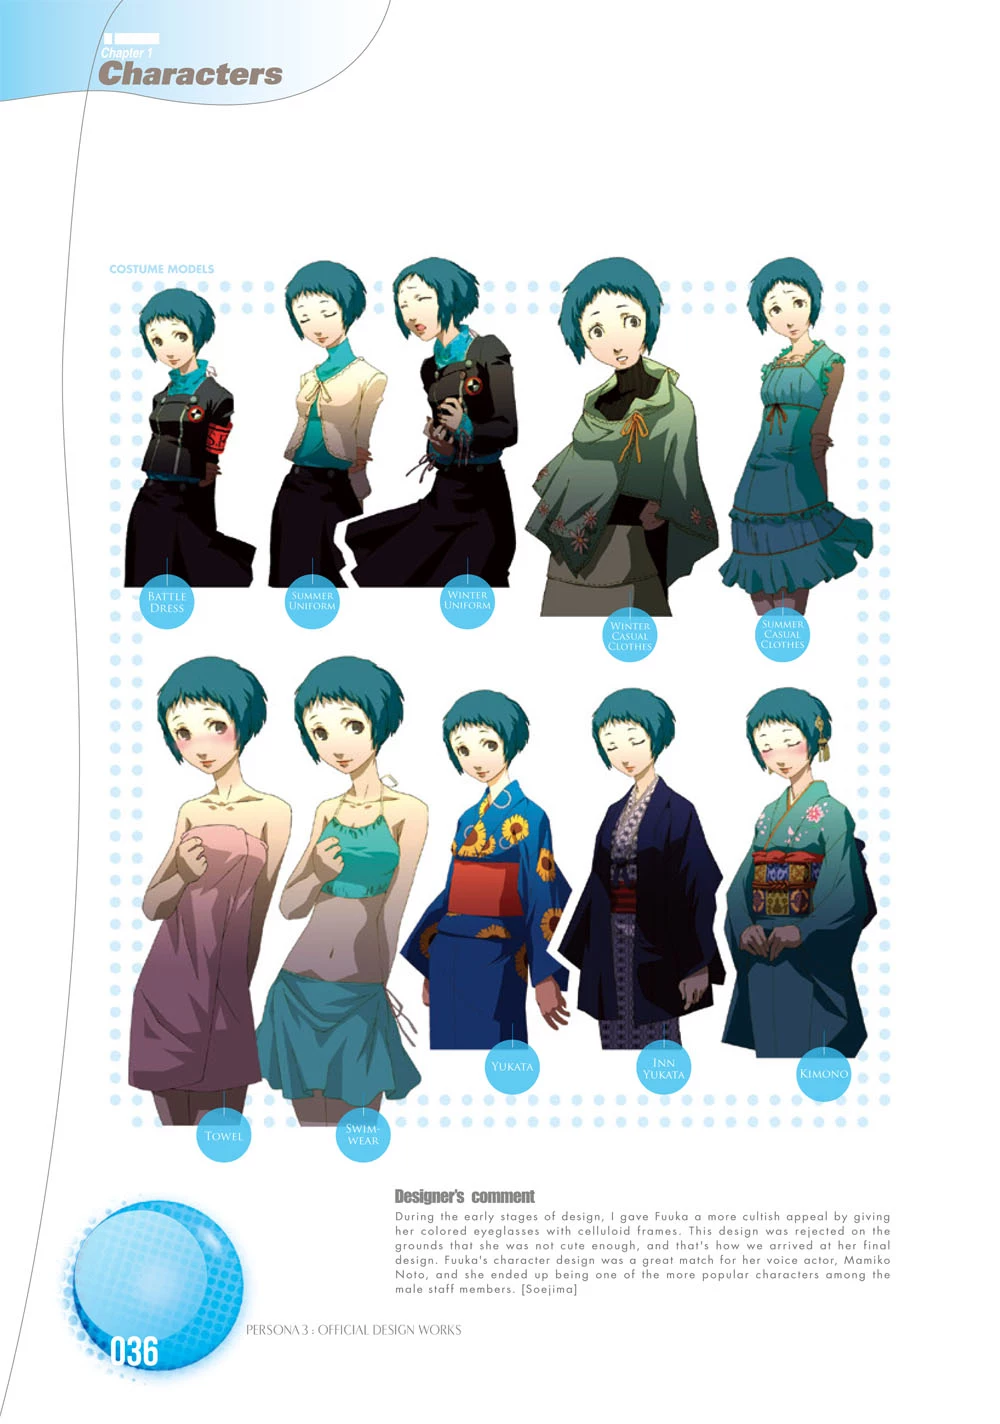 Persona 3 characters Persona 3/Characters. 2020-04-09